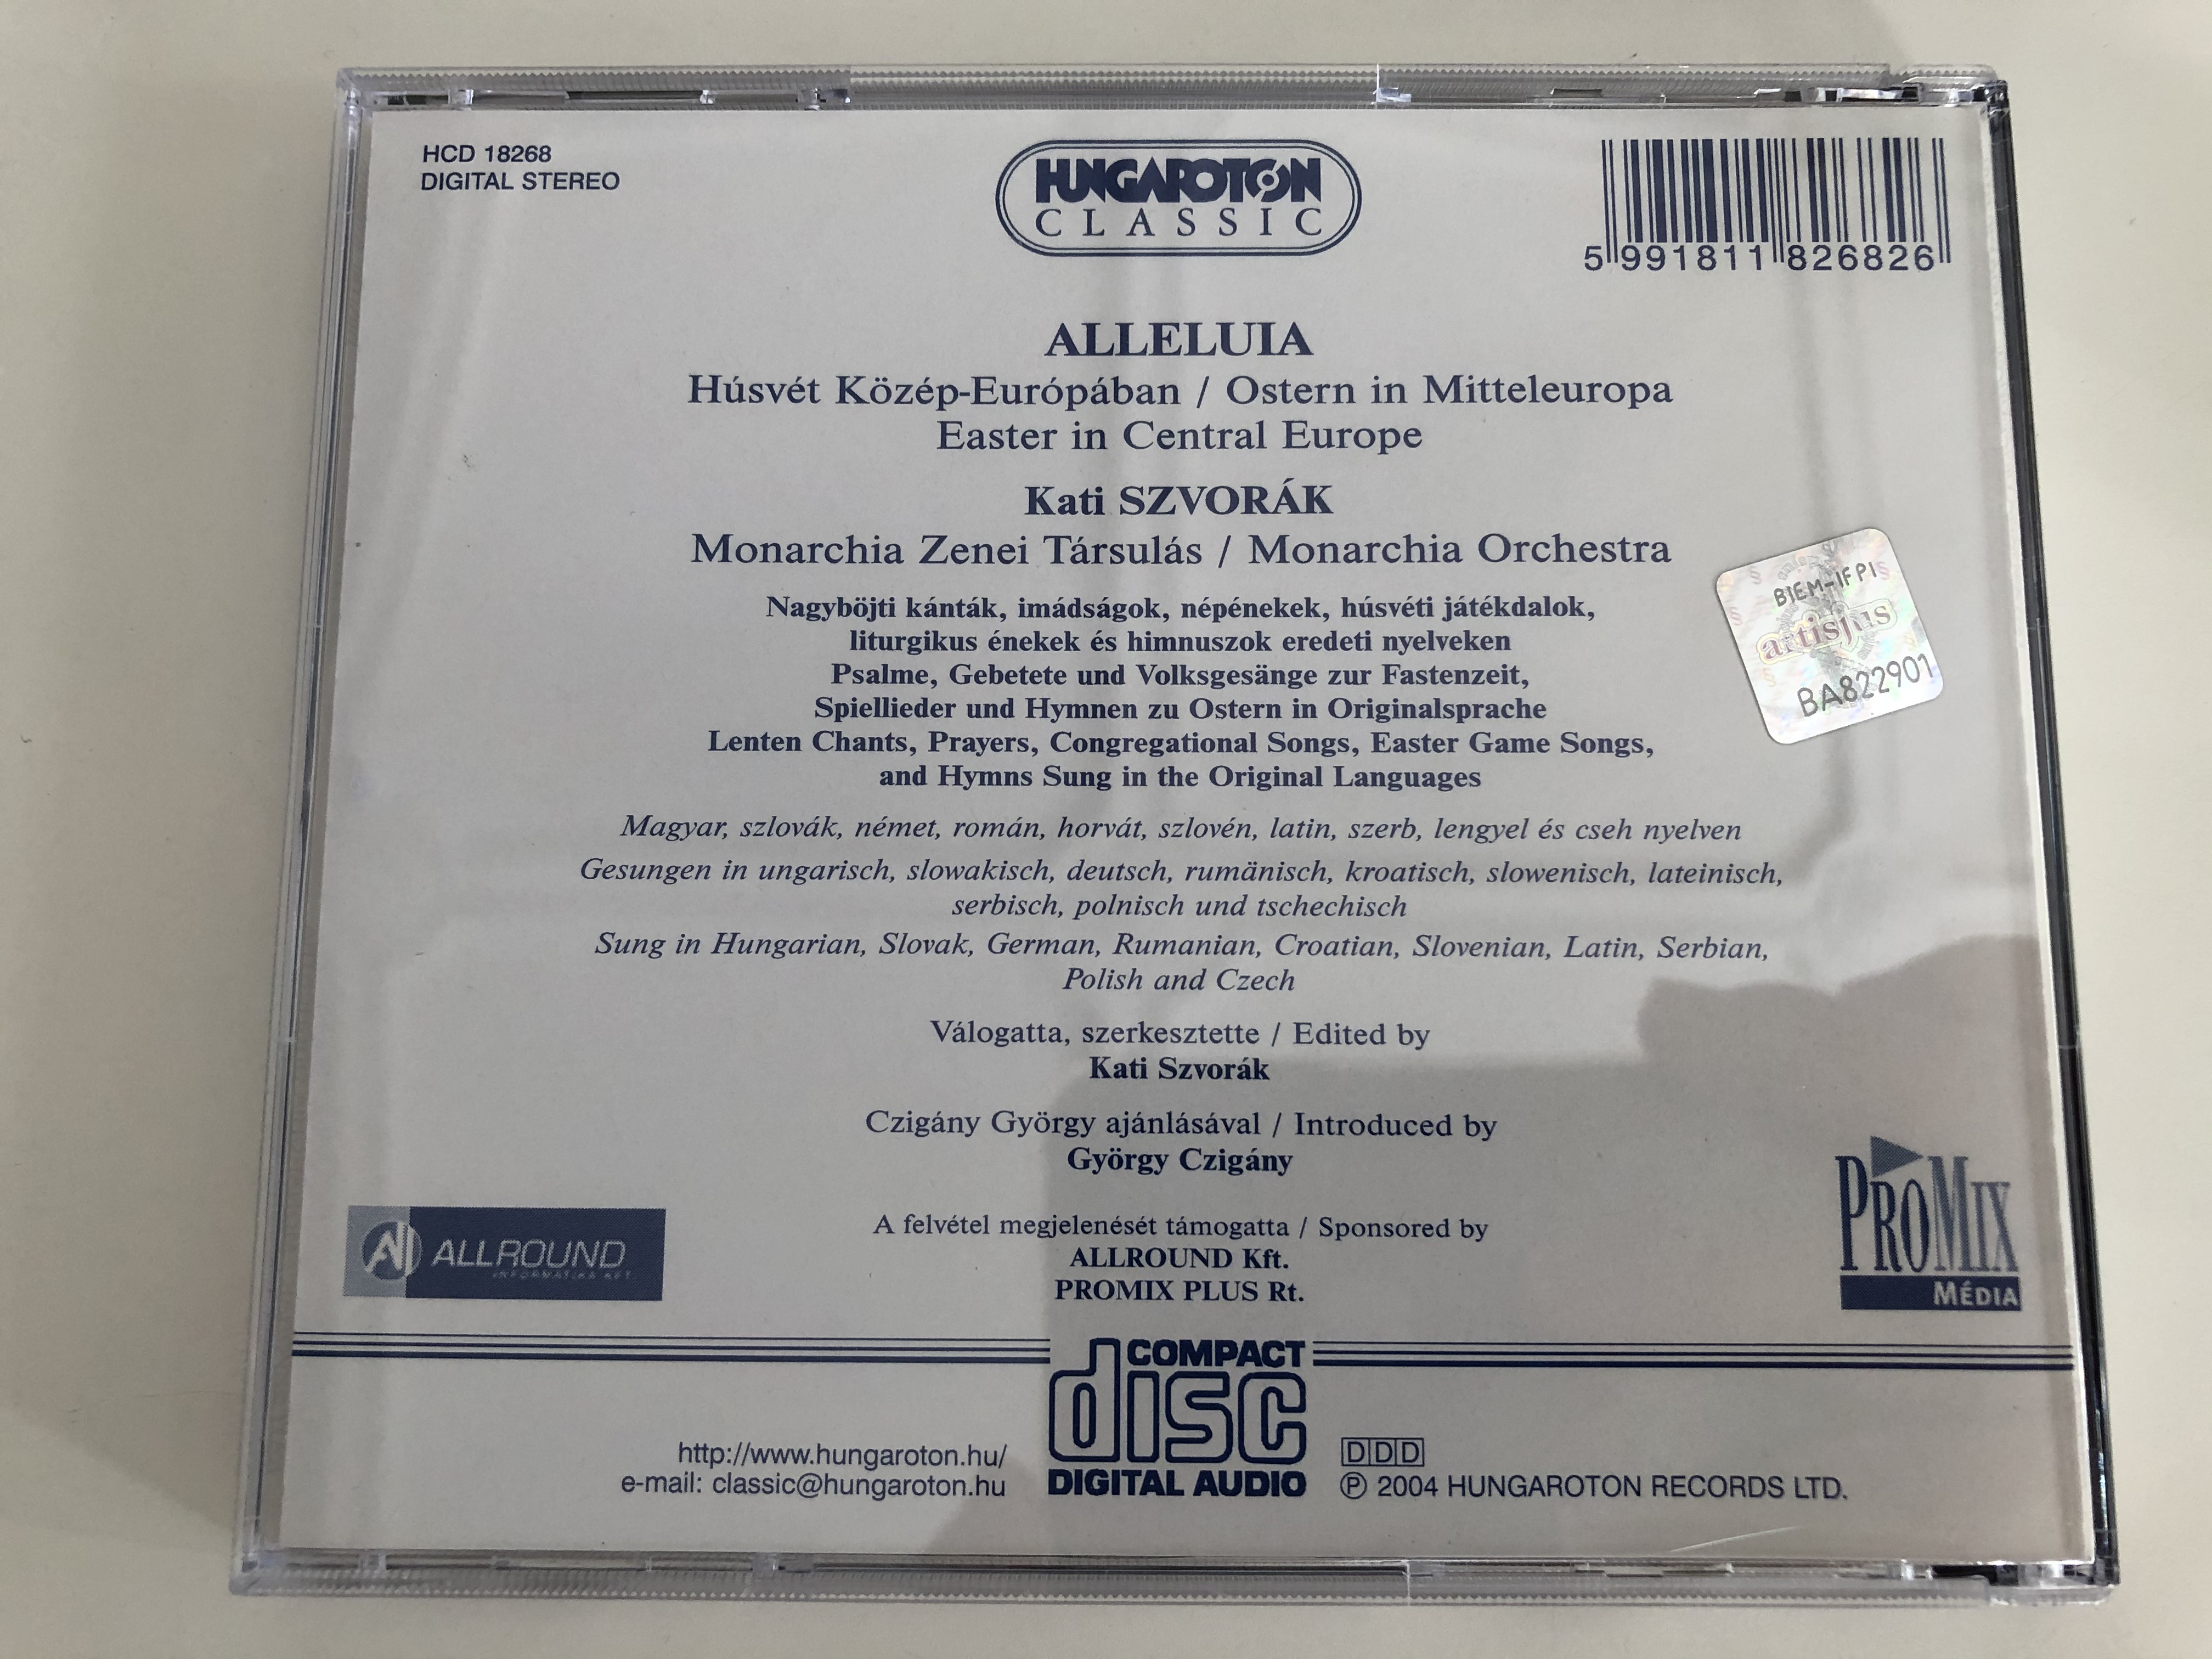 kati-szvor-k-alleluia-h-sv-t-k-z-p-eur-p-ban-easter-in-central-europe-hungaroton-classic-audio-cd-2004-stereo-hcd-18268-9-.jpg